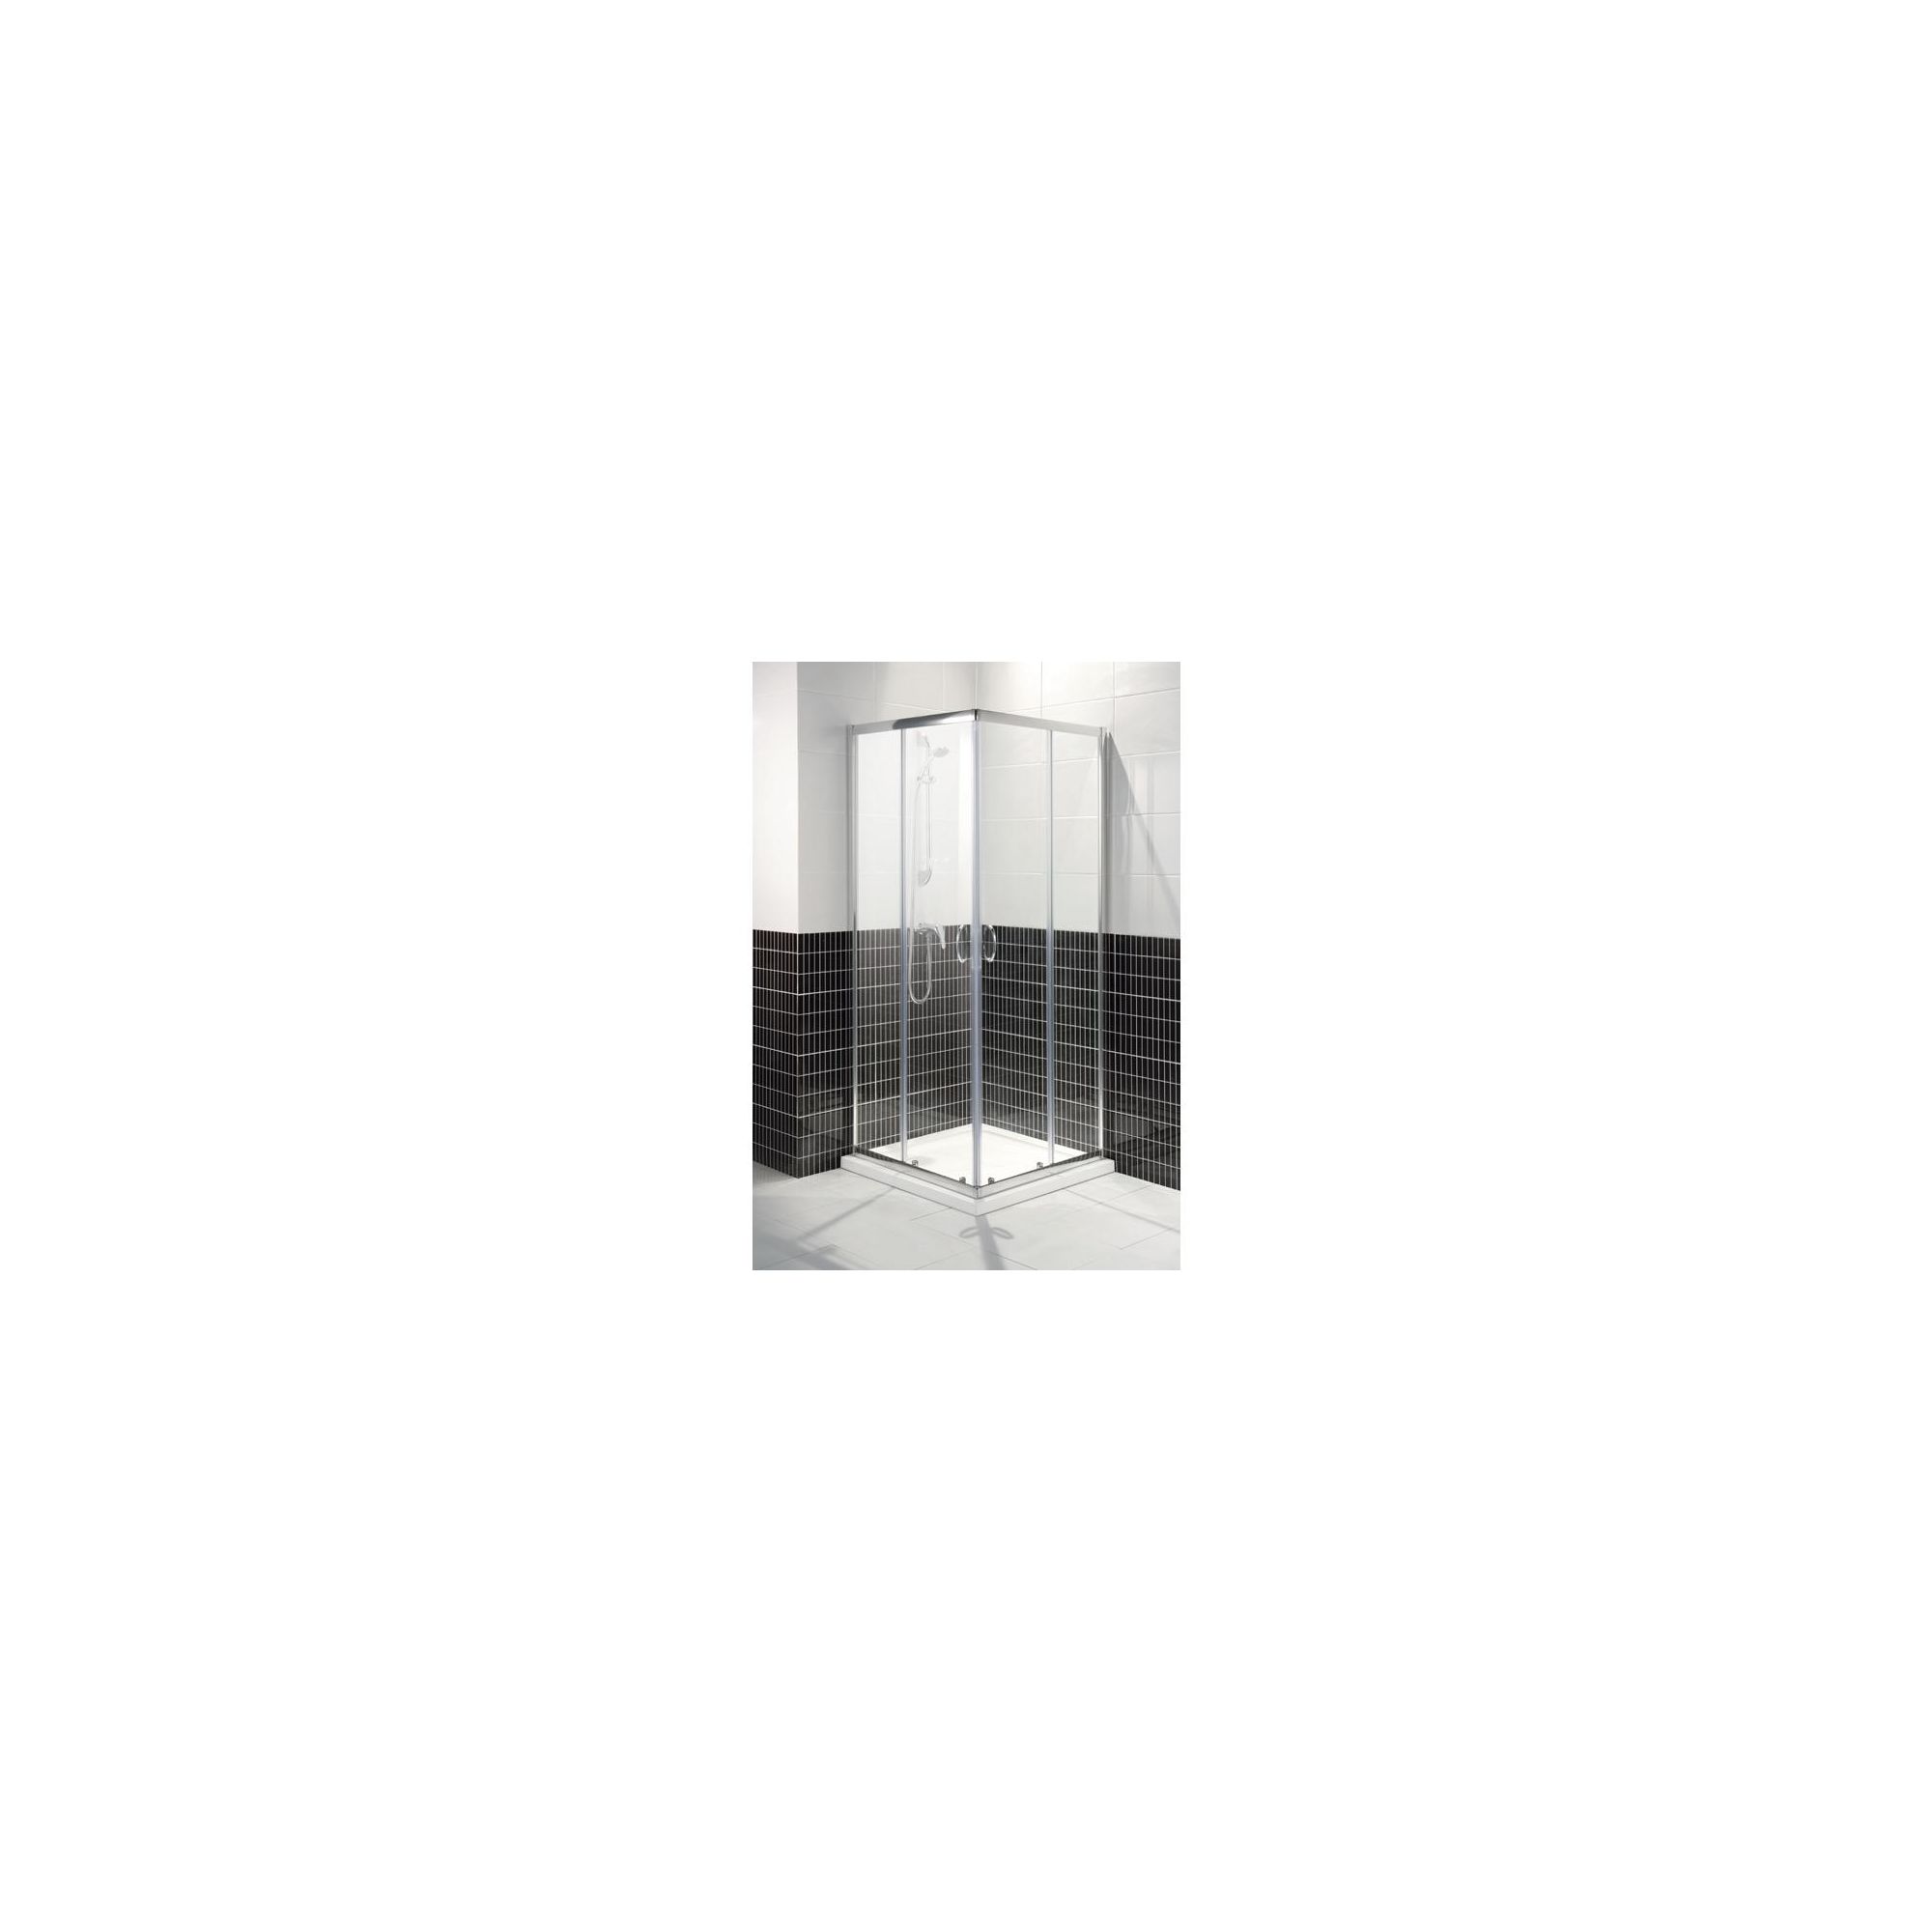 Balterley Framed Corner Entry Shower Enclosure, 900mm x 900mm, Standard Tray, 6mm glass at Tesco Direct